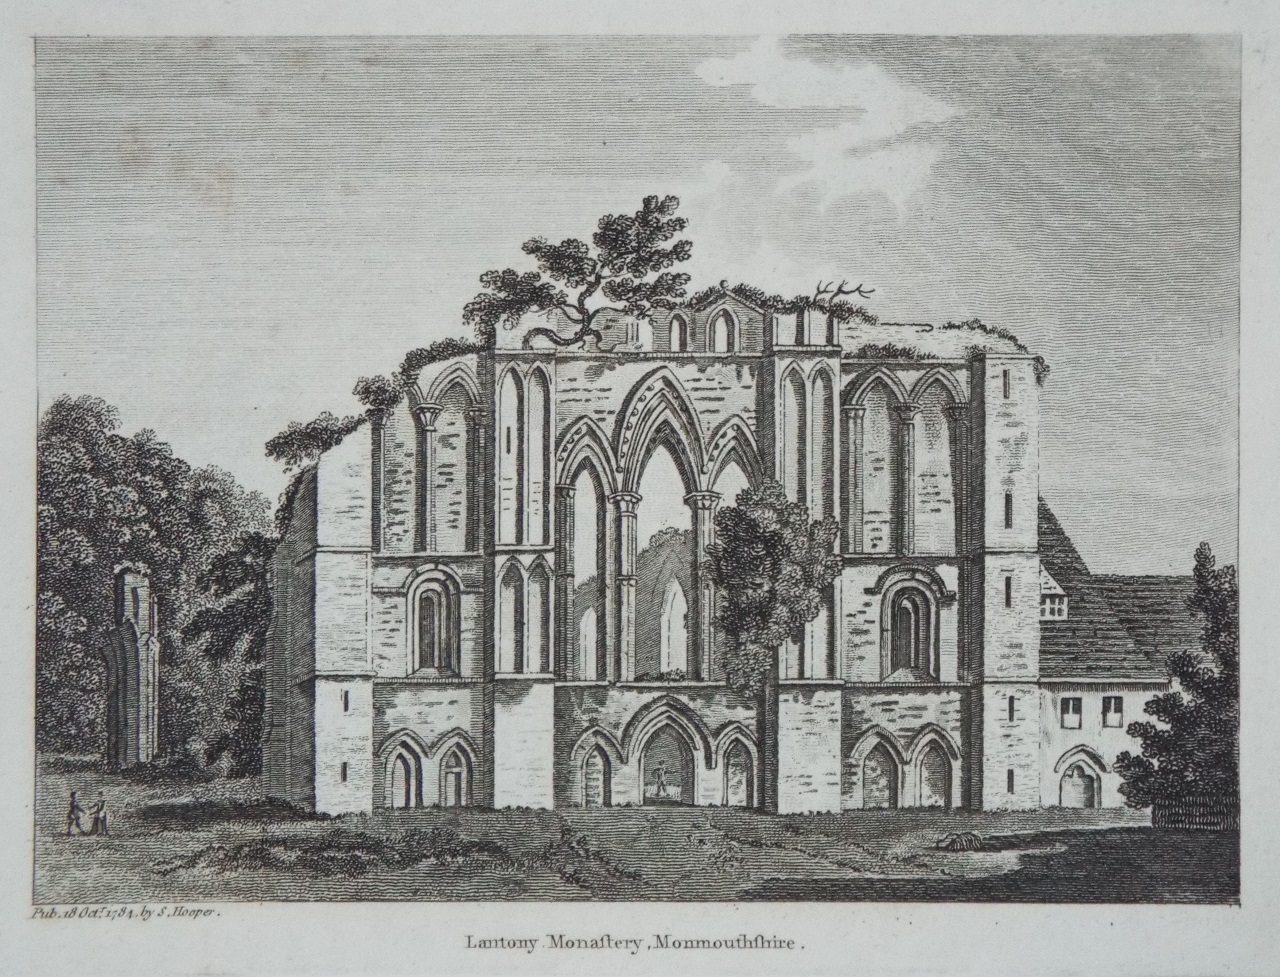 Print - Lantony Monastery, Monmouthshire.